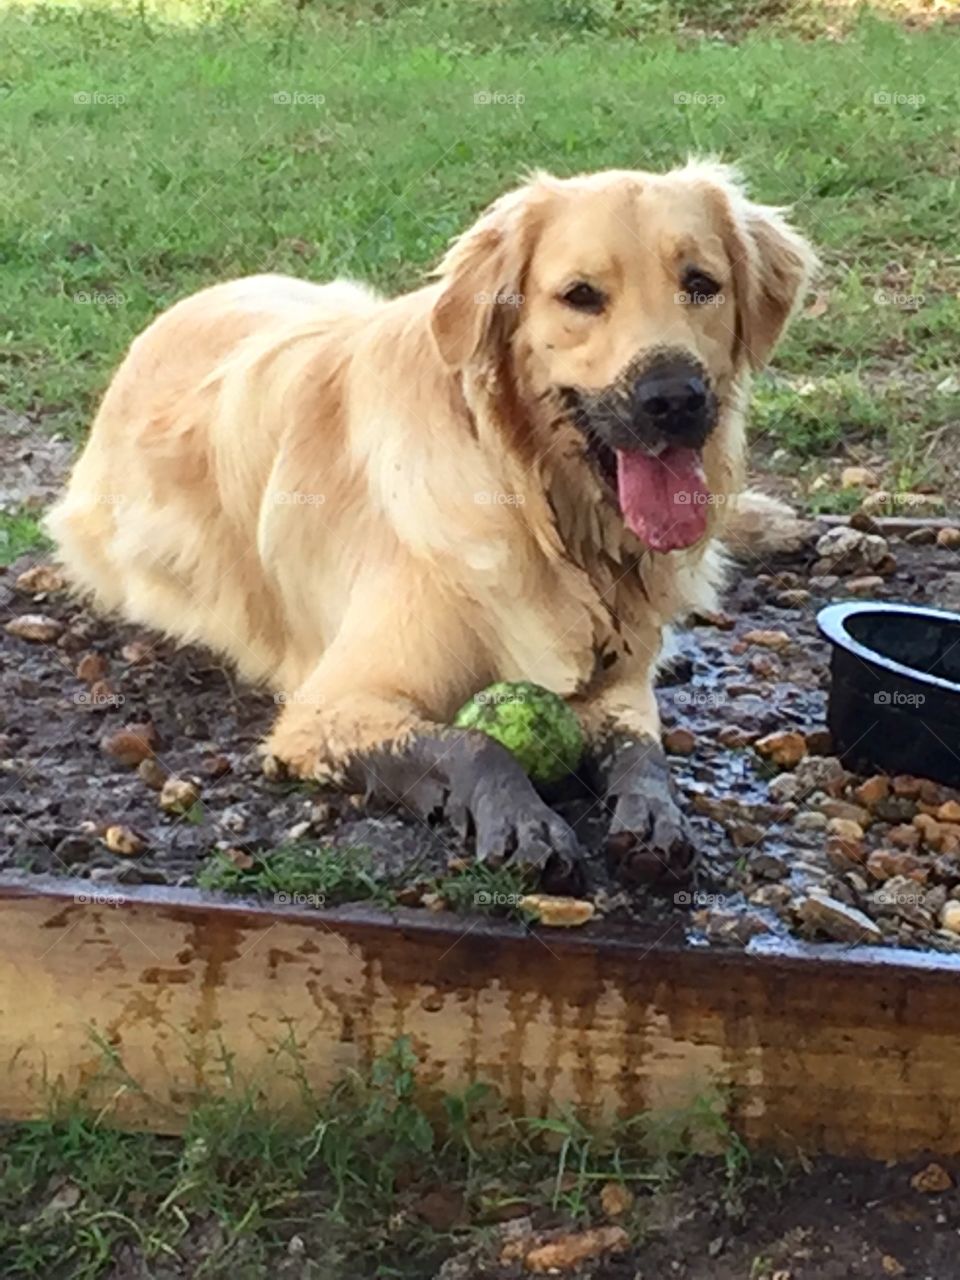 Mud dog